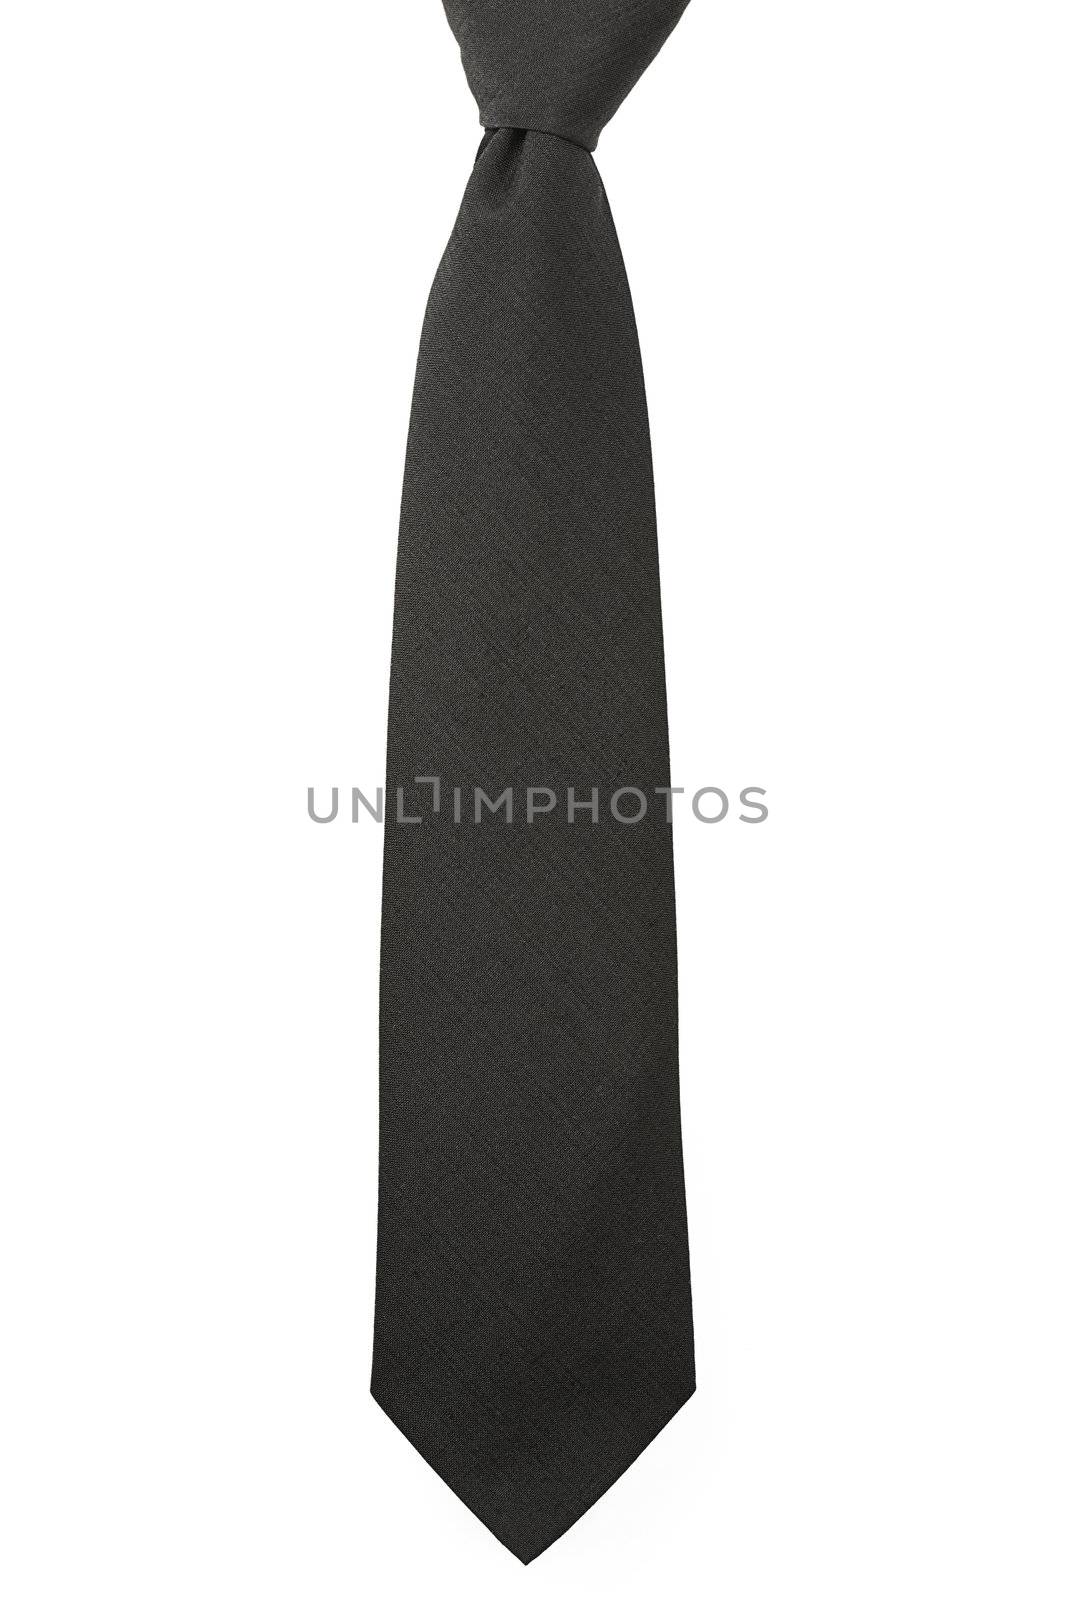 black tie by RobStark